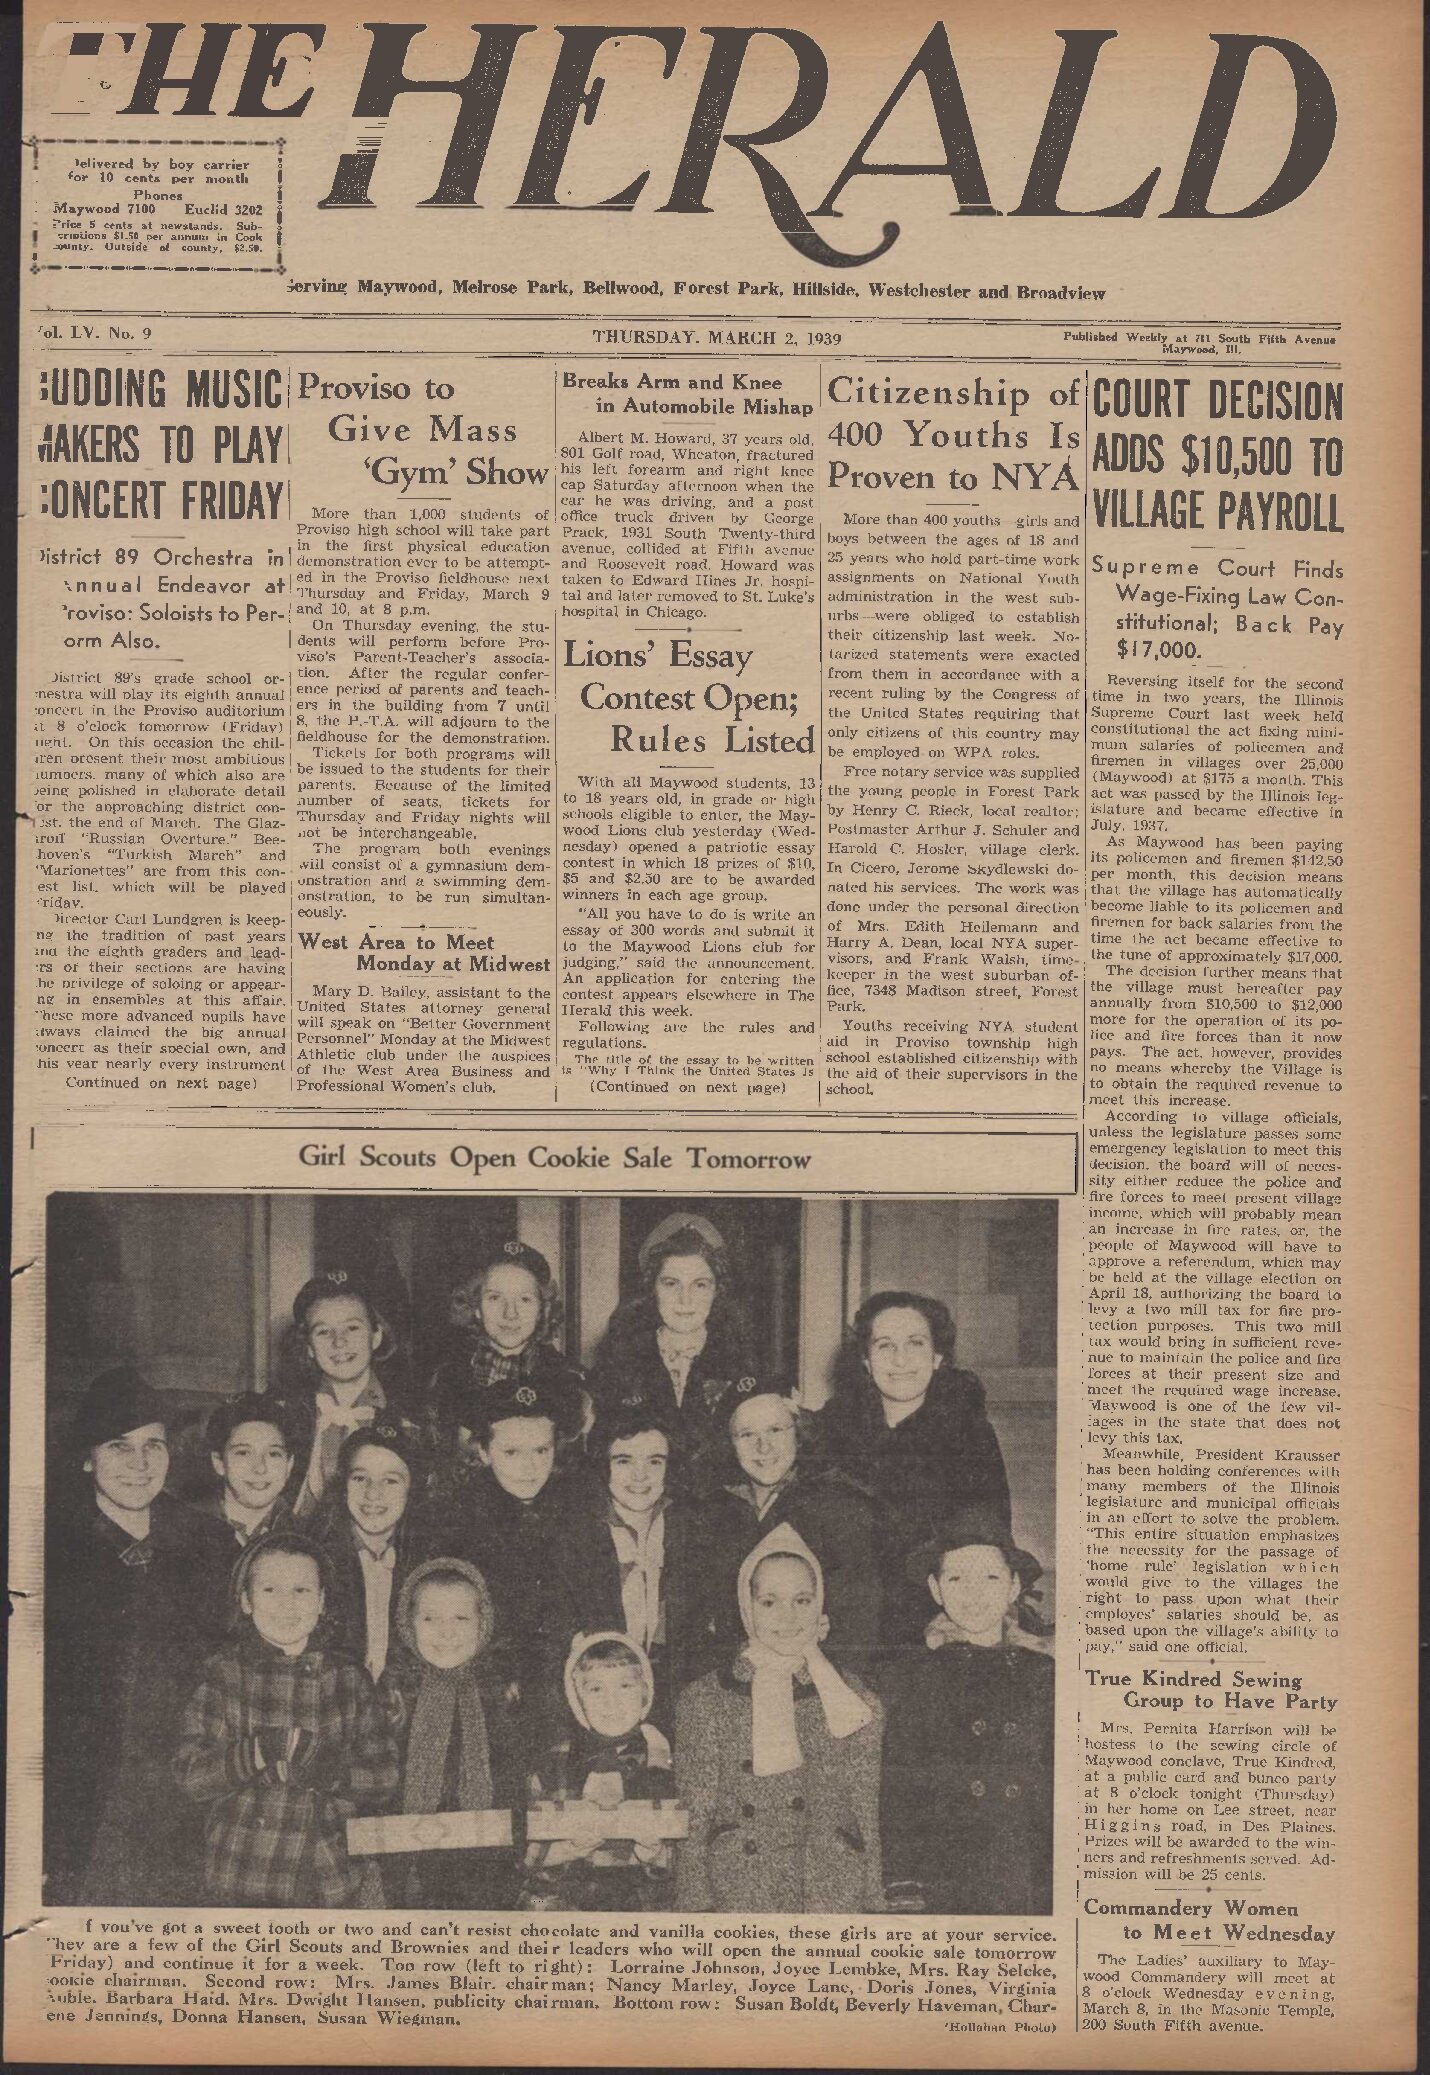 The Herald – 19390302